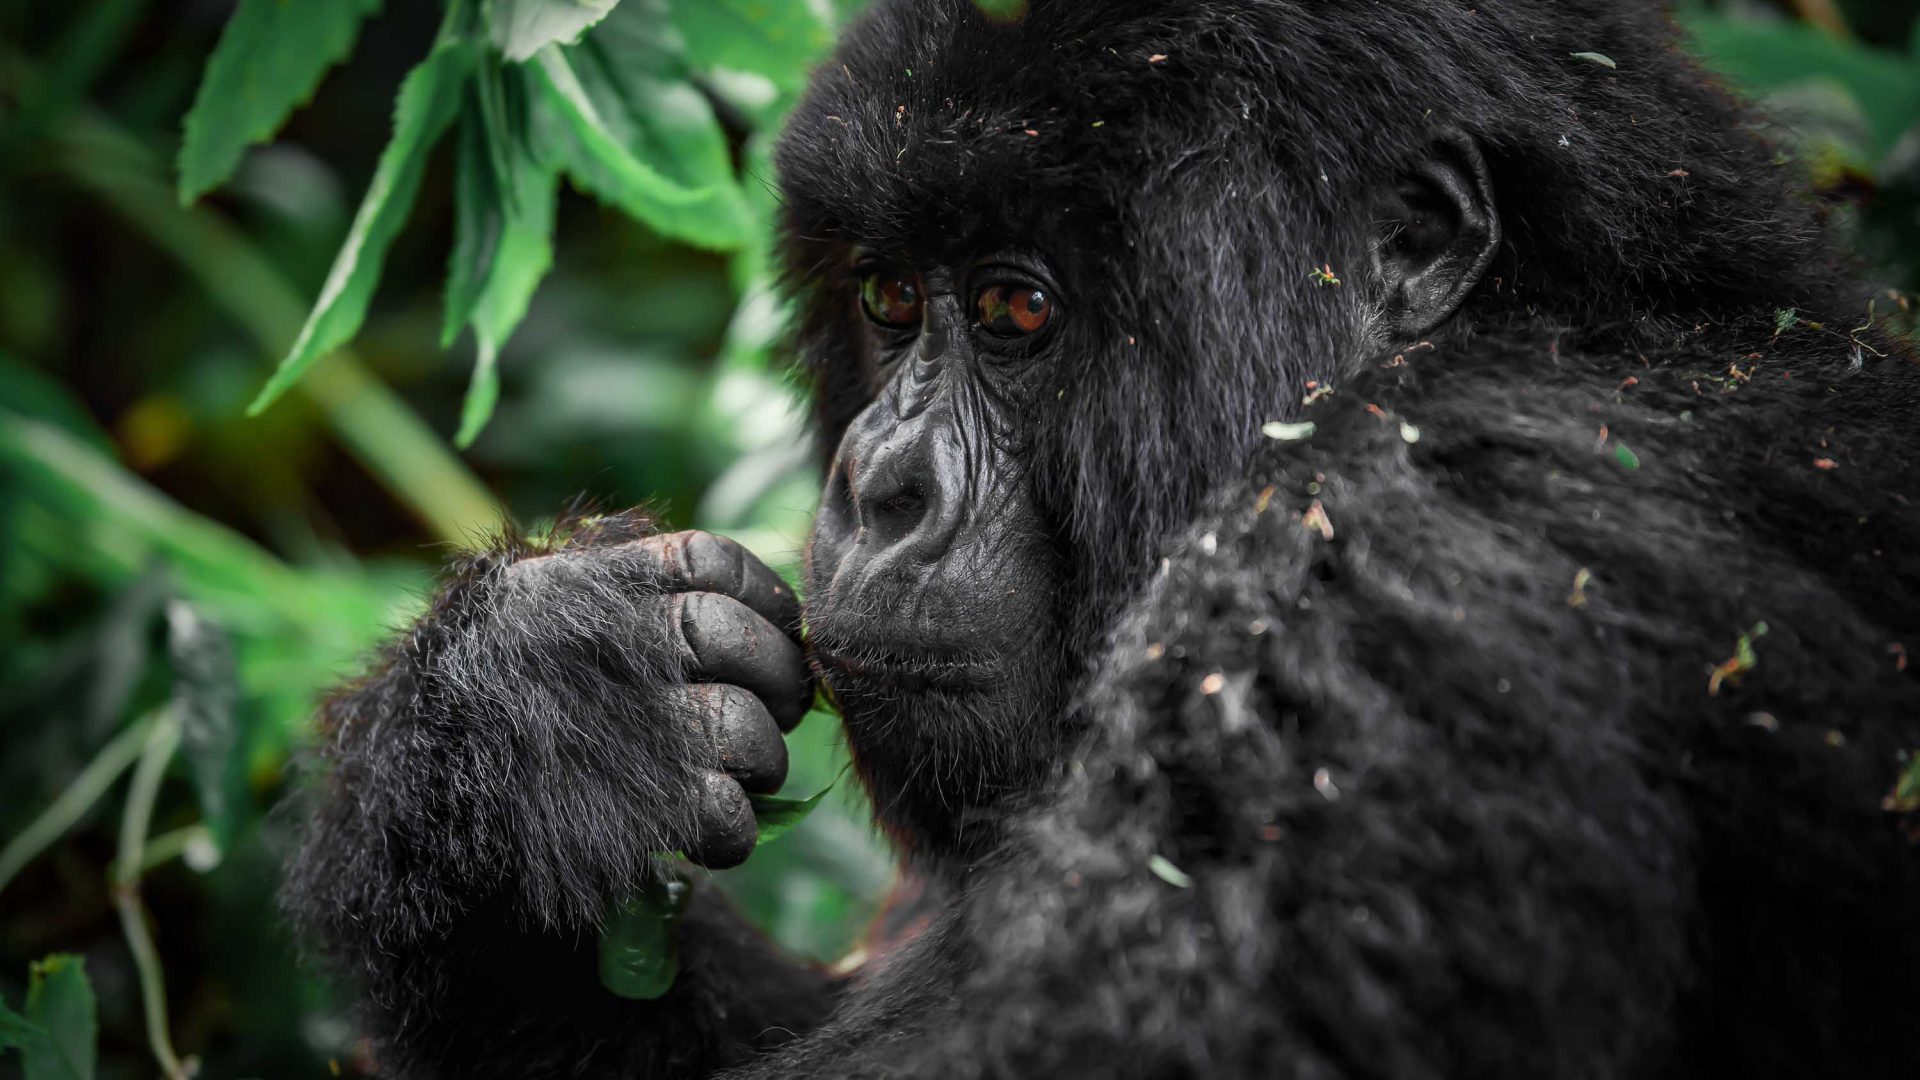 A close up of a gorilla.